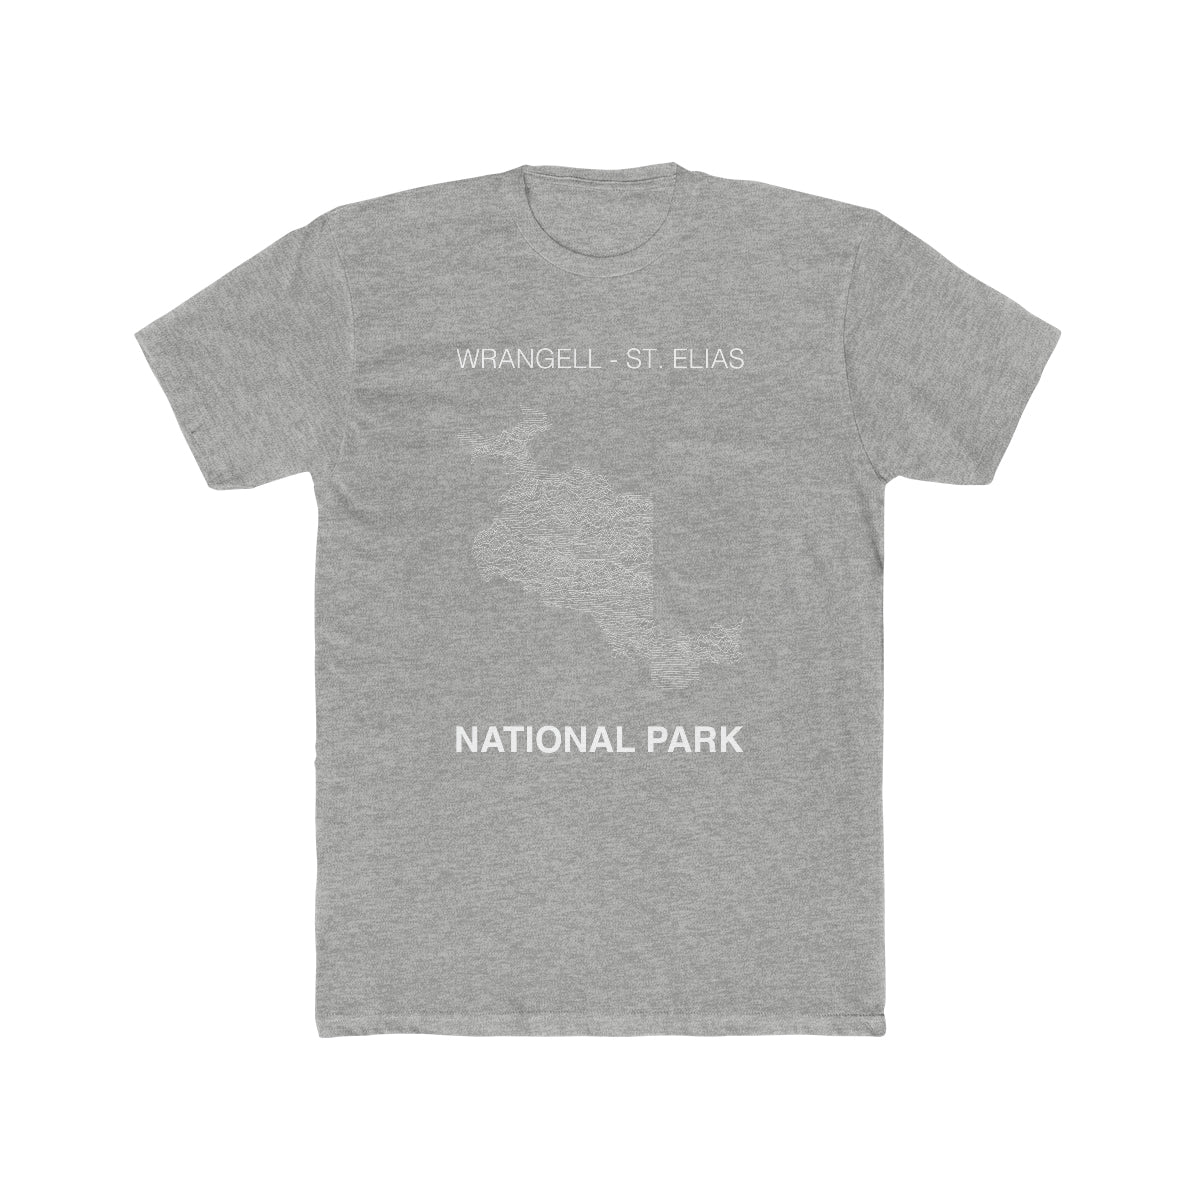 Wrangell St. Elias National Park T-Shirt Lines